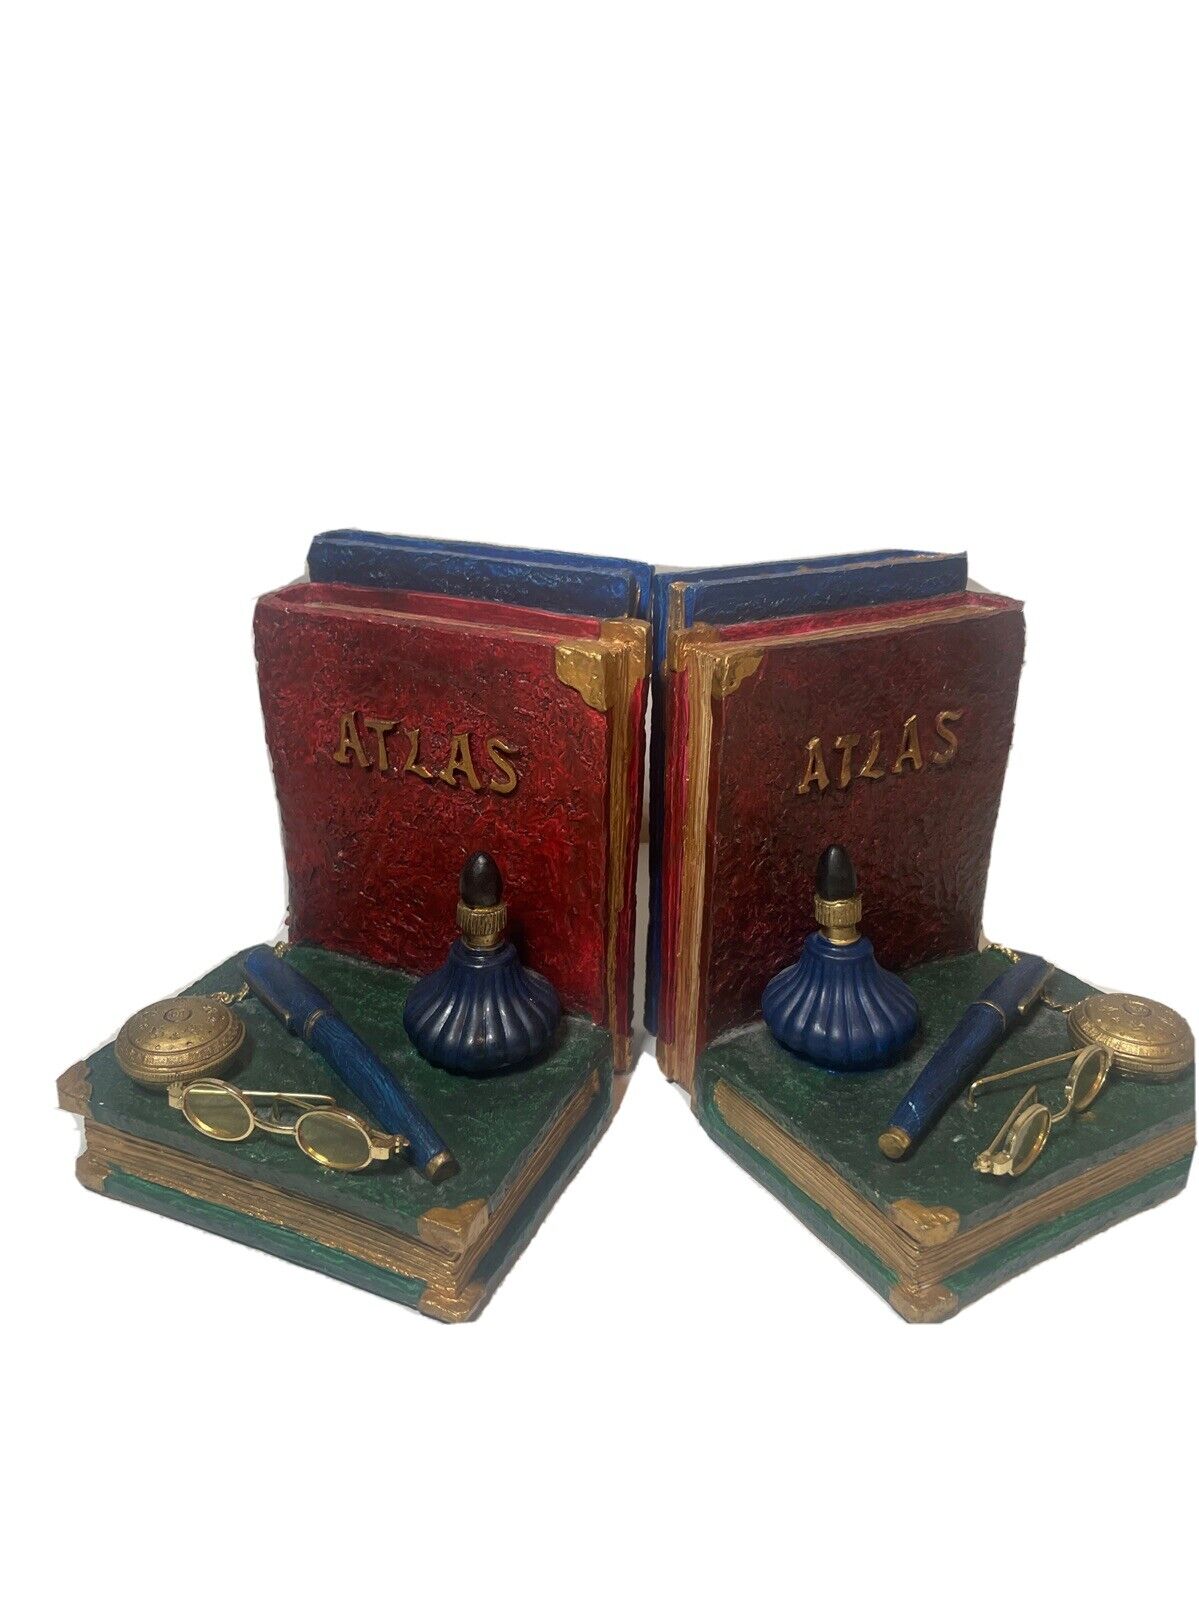 Heavy Bookends Old Books Glasses Pen Pocket Watch Atlas Decorative Ceramic T120